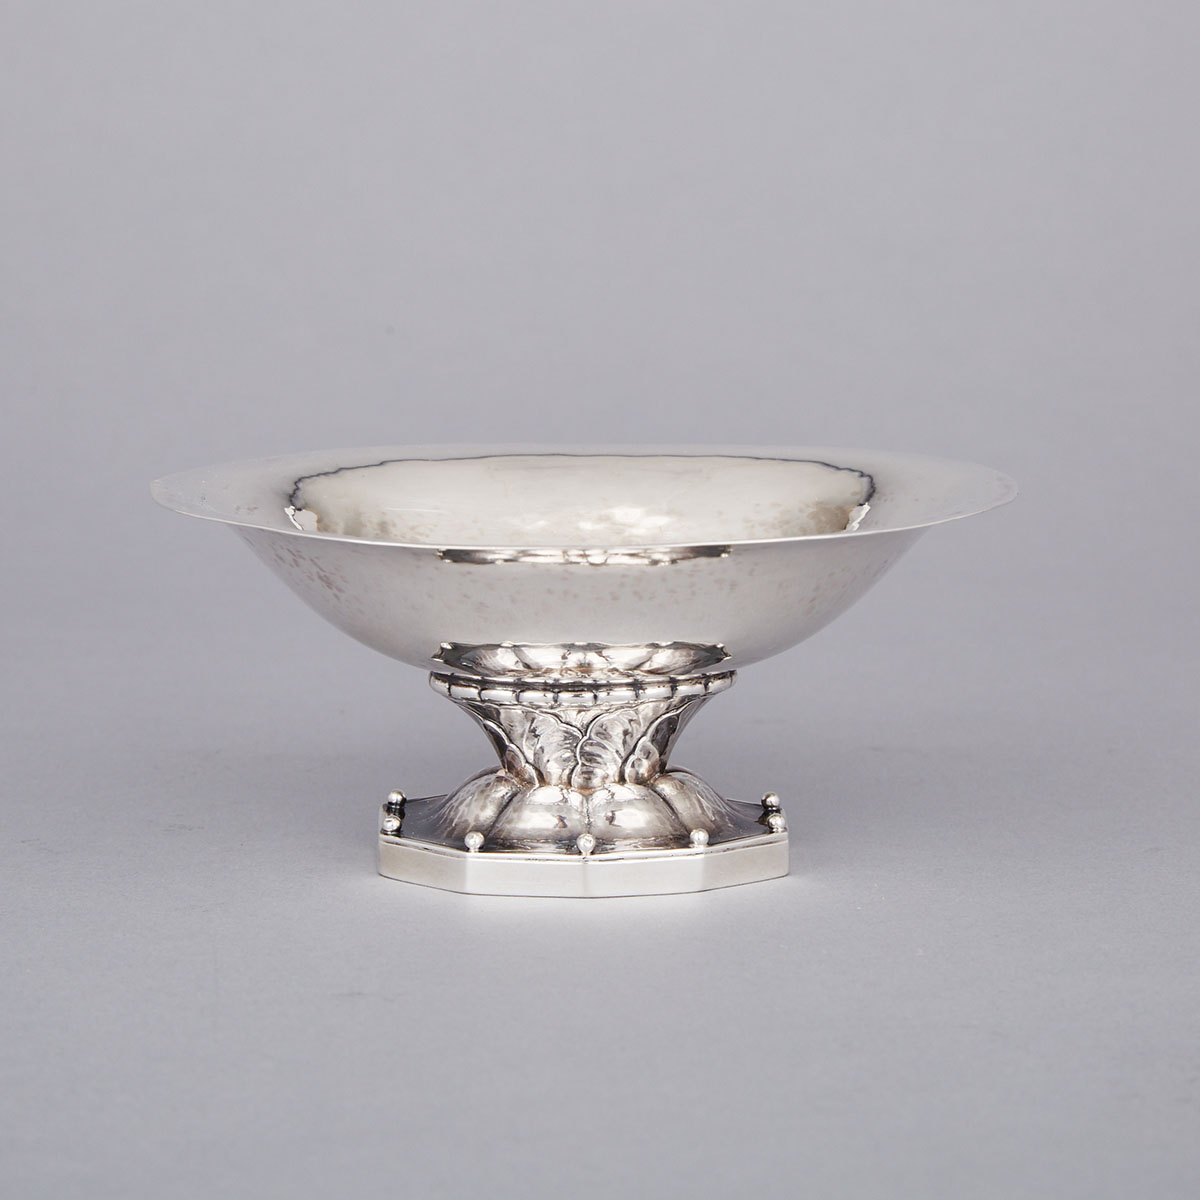 Danish Silver Footed Bowl, #181, Georg Jensen, Copenhagen, c.1915-30